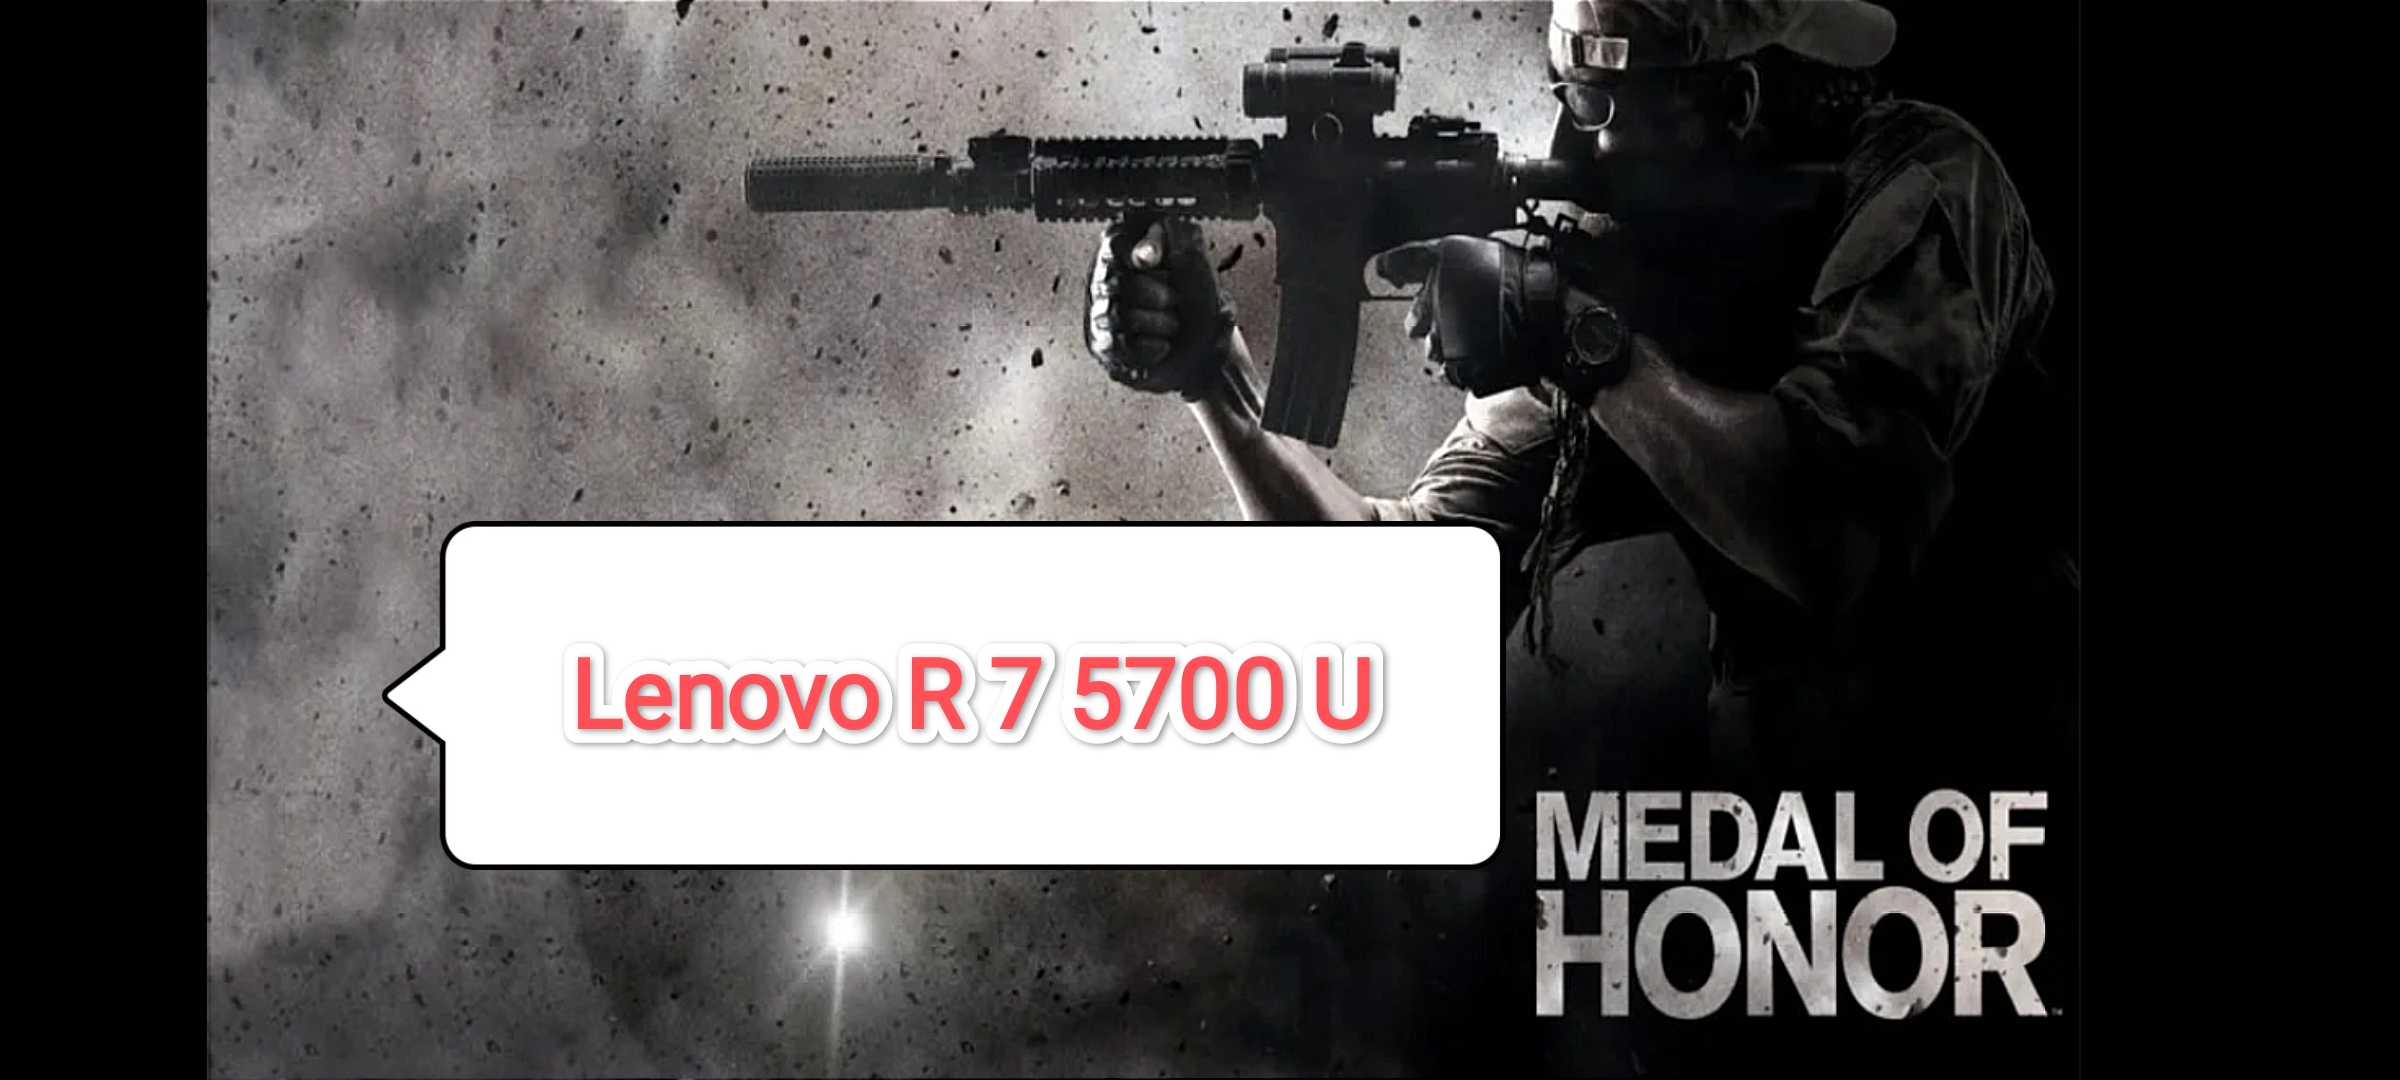 Medal of Honor 2010 - настройки графики для 60 фпс на слабом ПК (Lenovo R 7 5700 U)